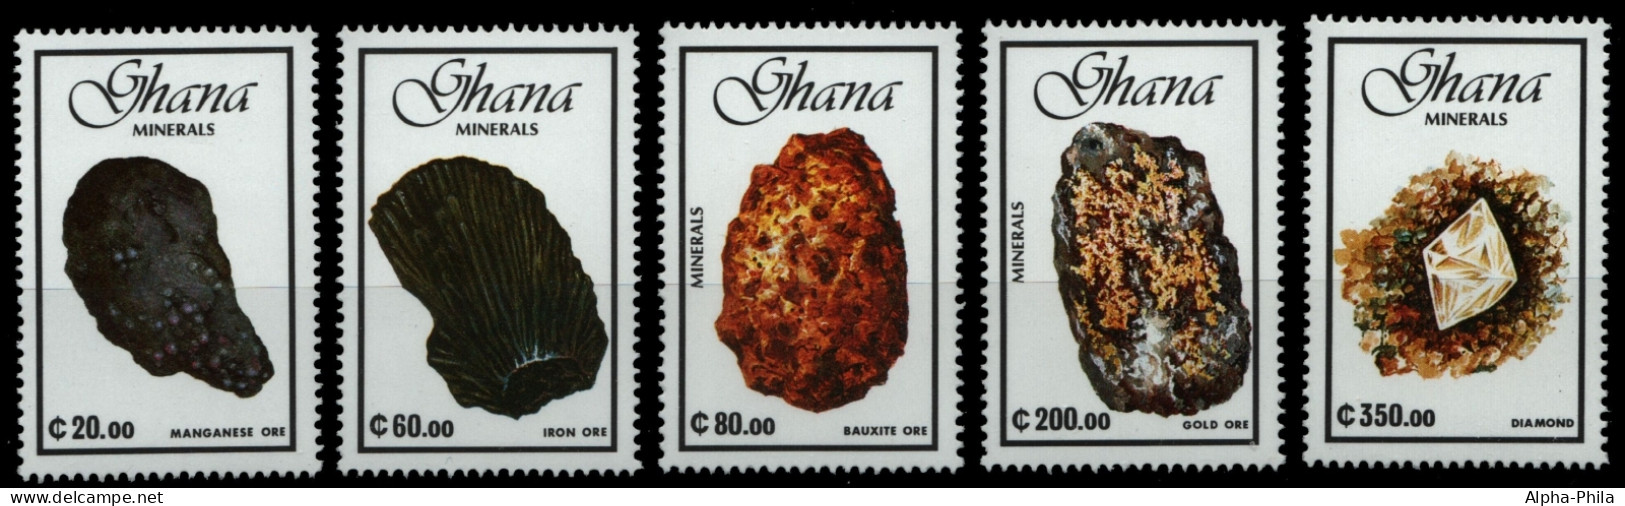 Ghana 1991 - Mi-Nr. 1472-1476 ** - MNH - Mineralien / Minerals - Ghana (1957-...)